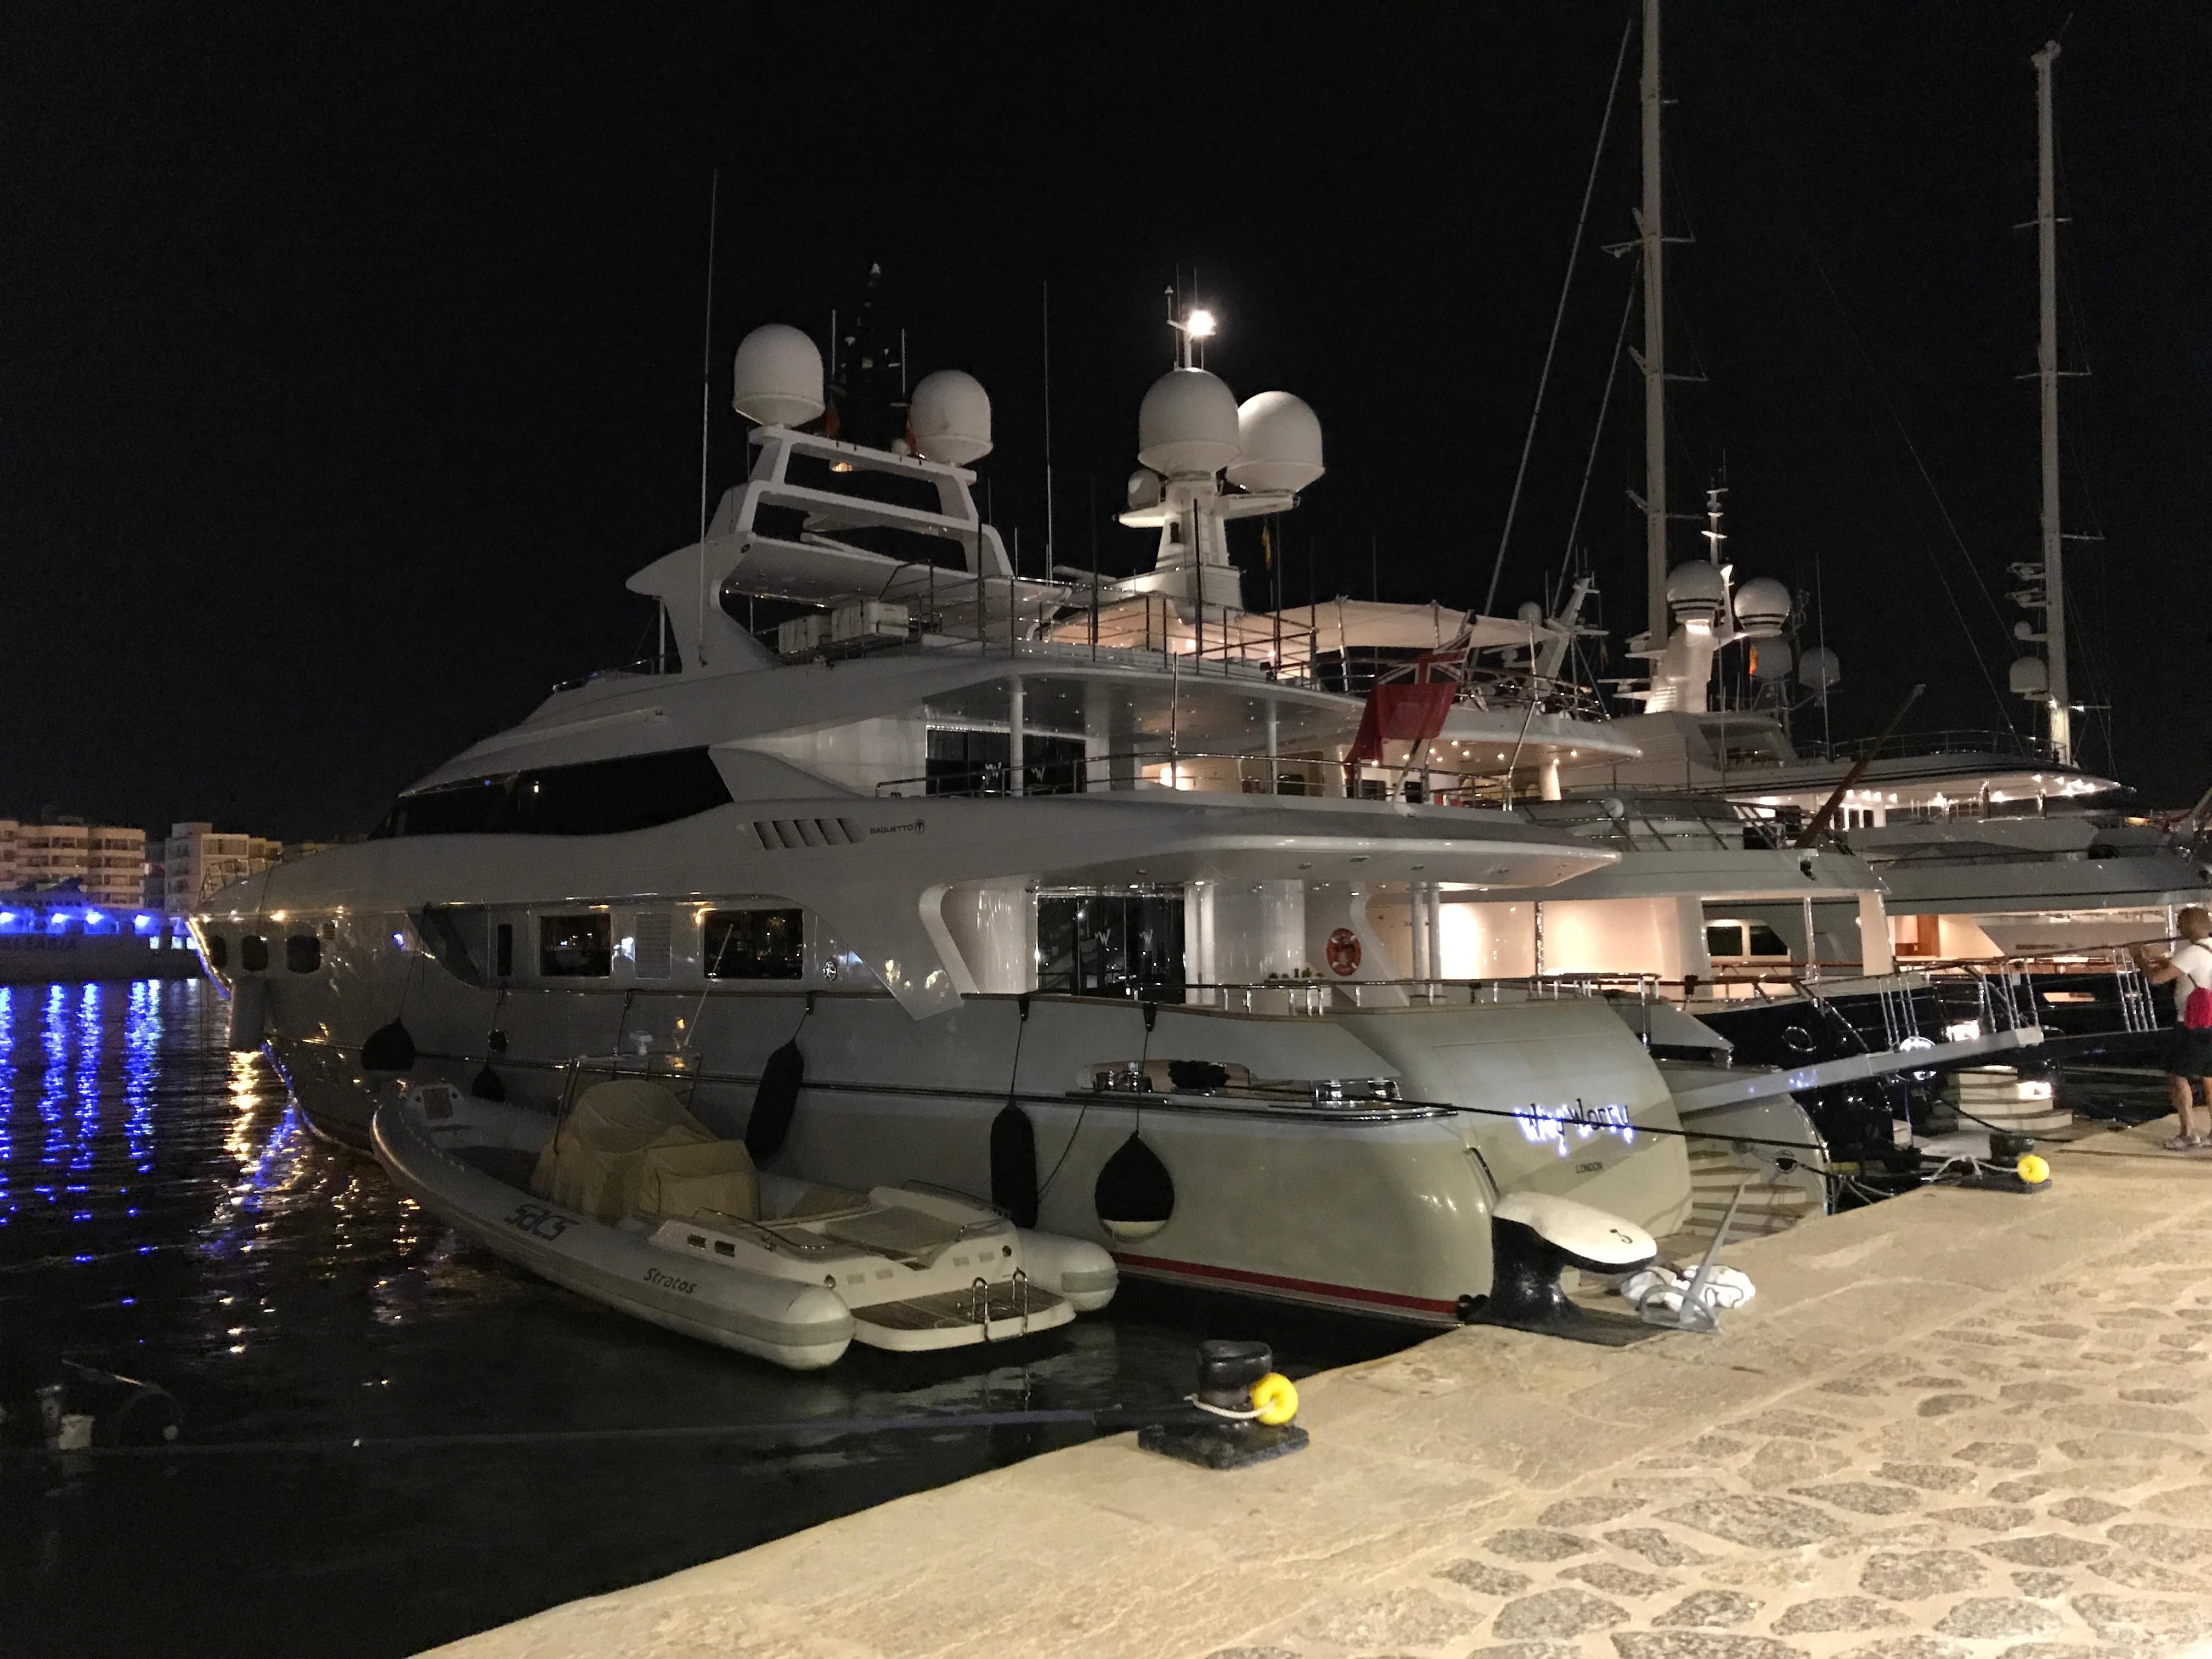 yacht on dock